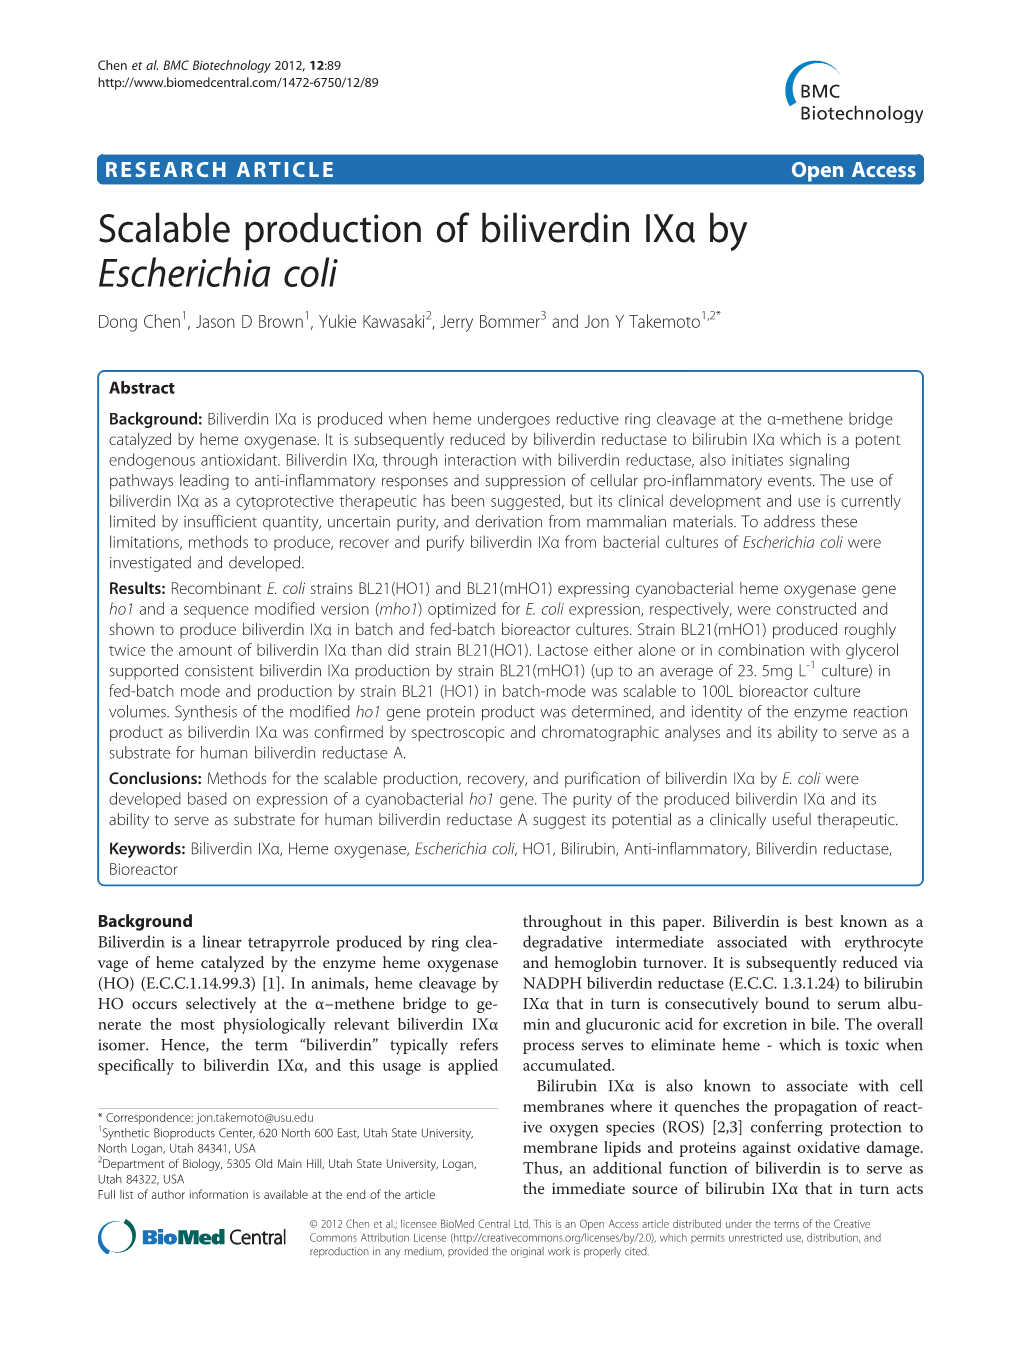 Scalable Production of Biliverdin Ixα by Escherichia Coli Dong Chen1, Jason D Brown1, Yukie Kawasaki2, Jerry Bommer3 and Jon Y Takemoto1,2*